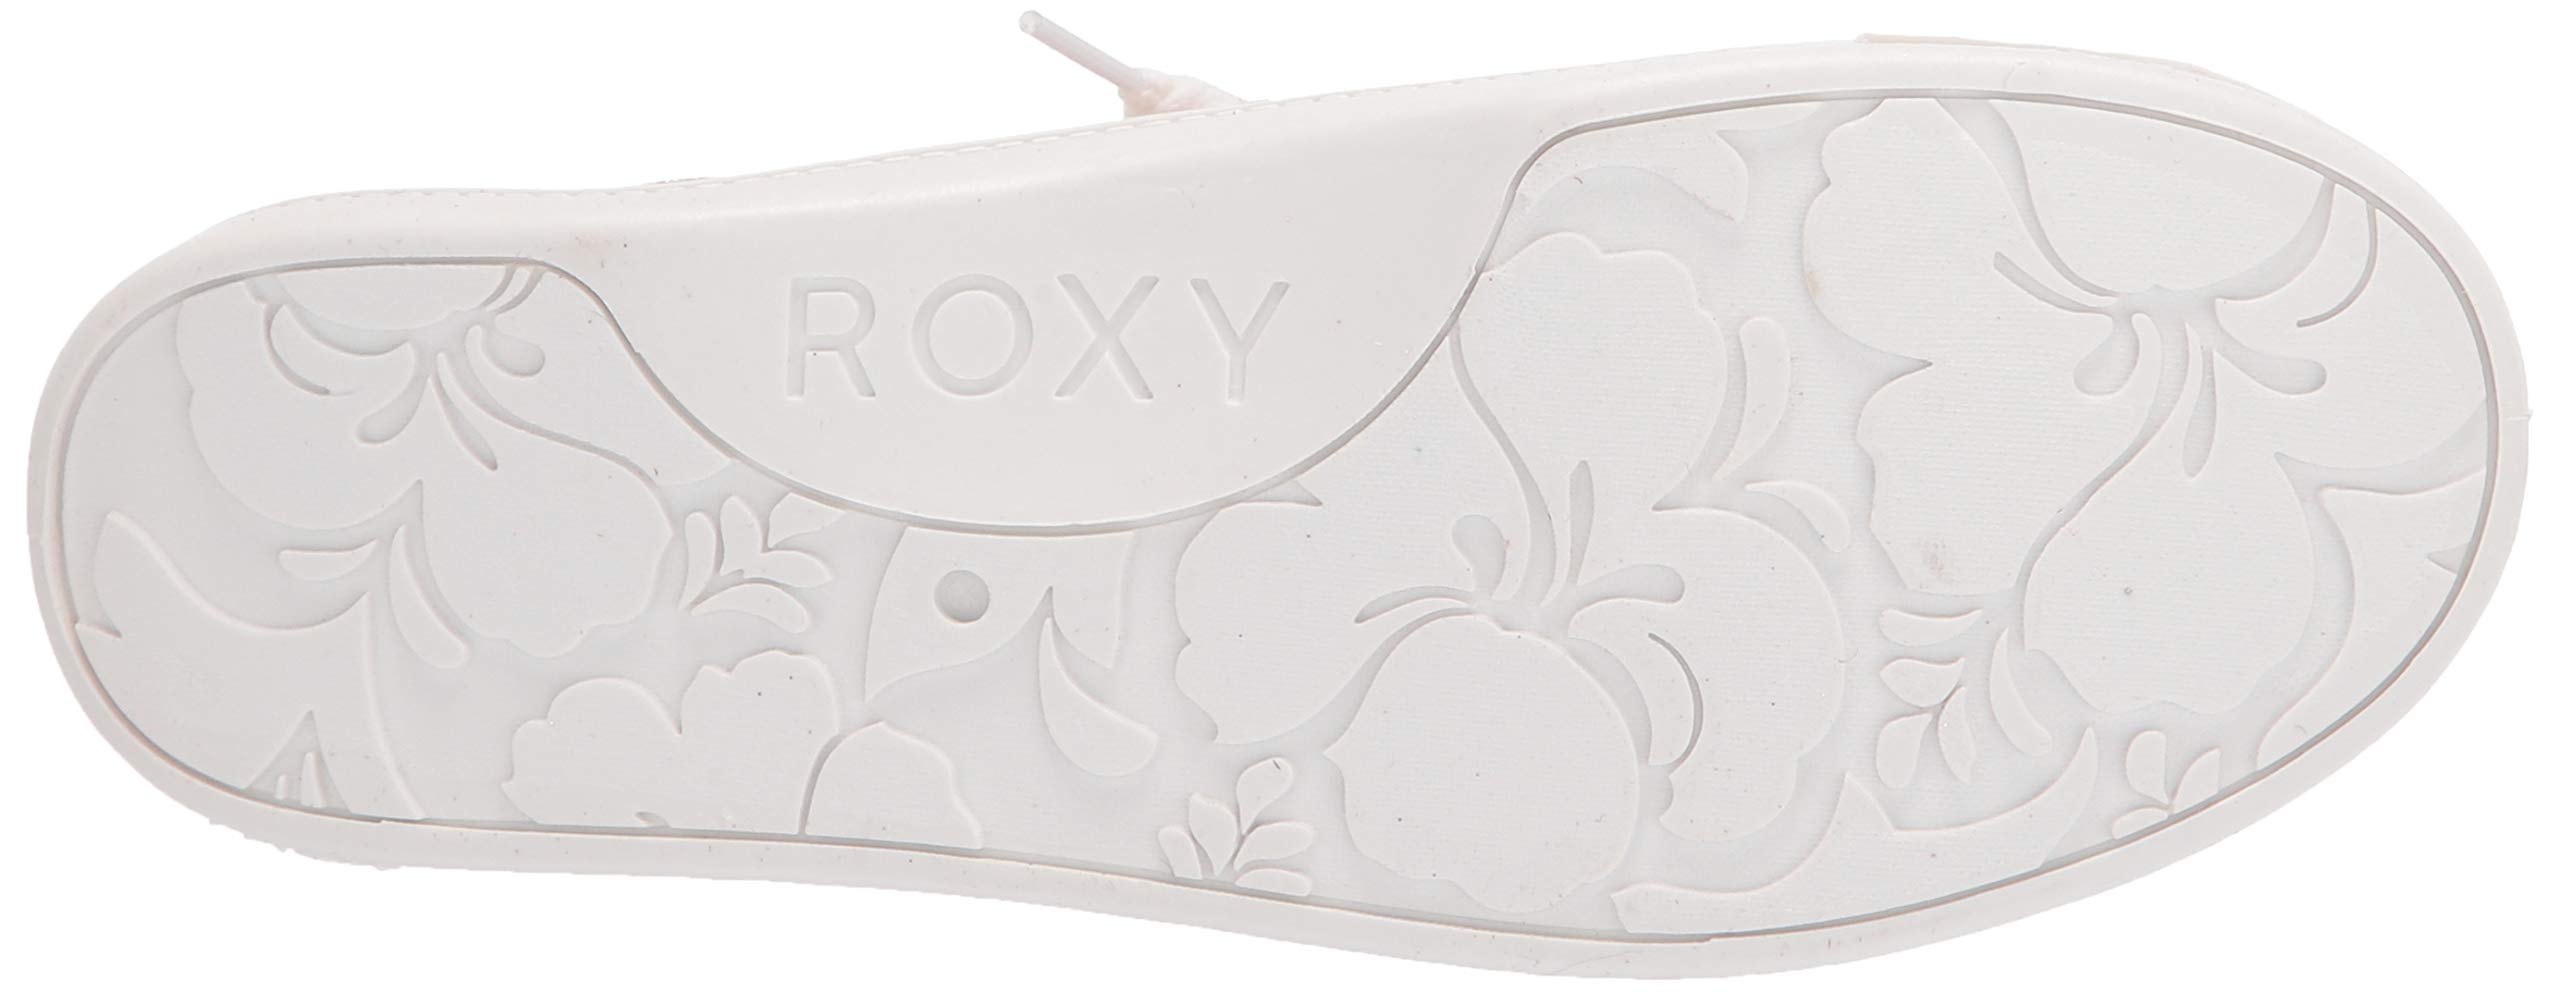 Roxy Unisex-Child Rory Slip on Sneaker Shoe